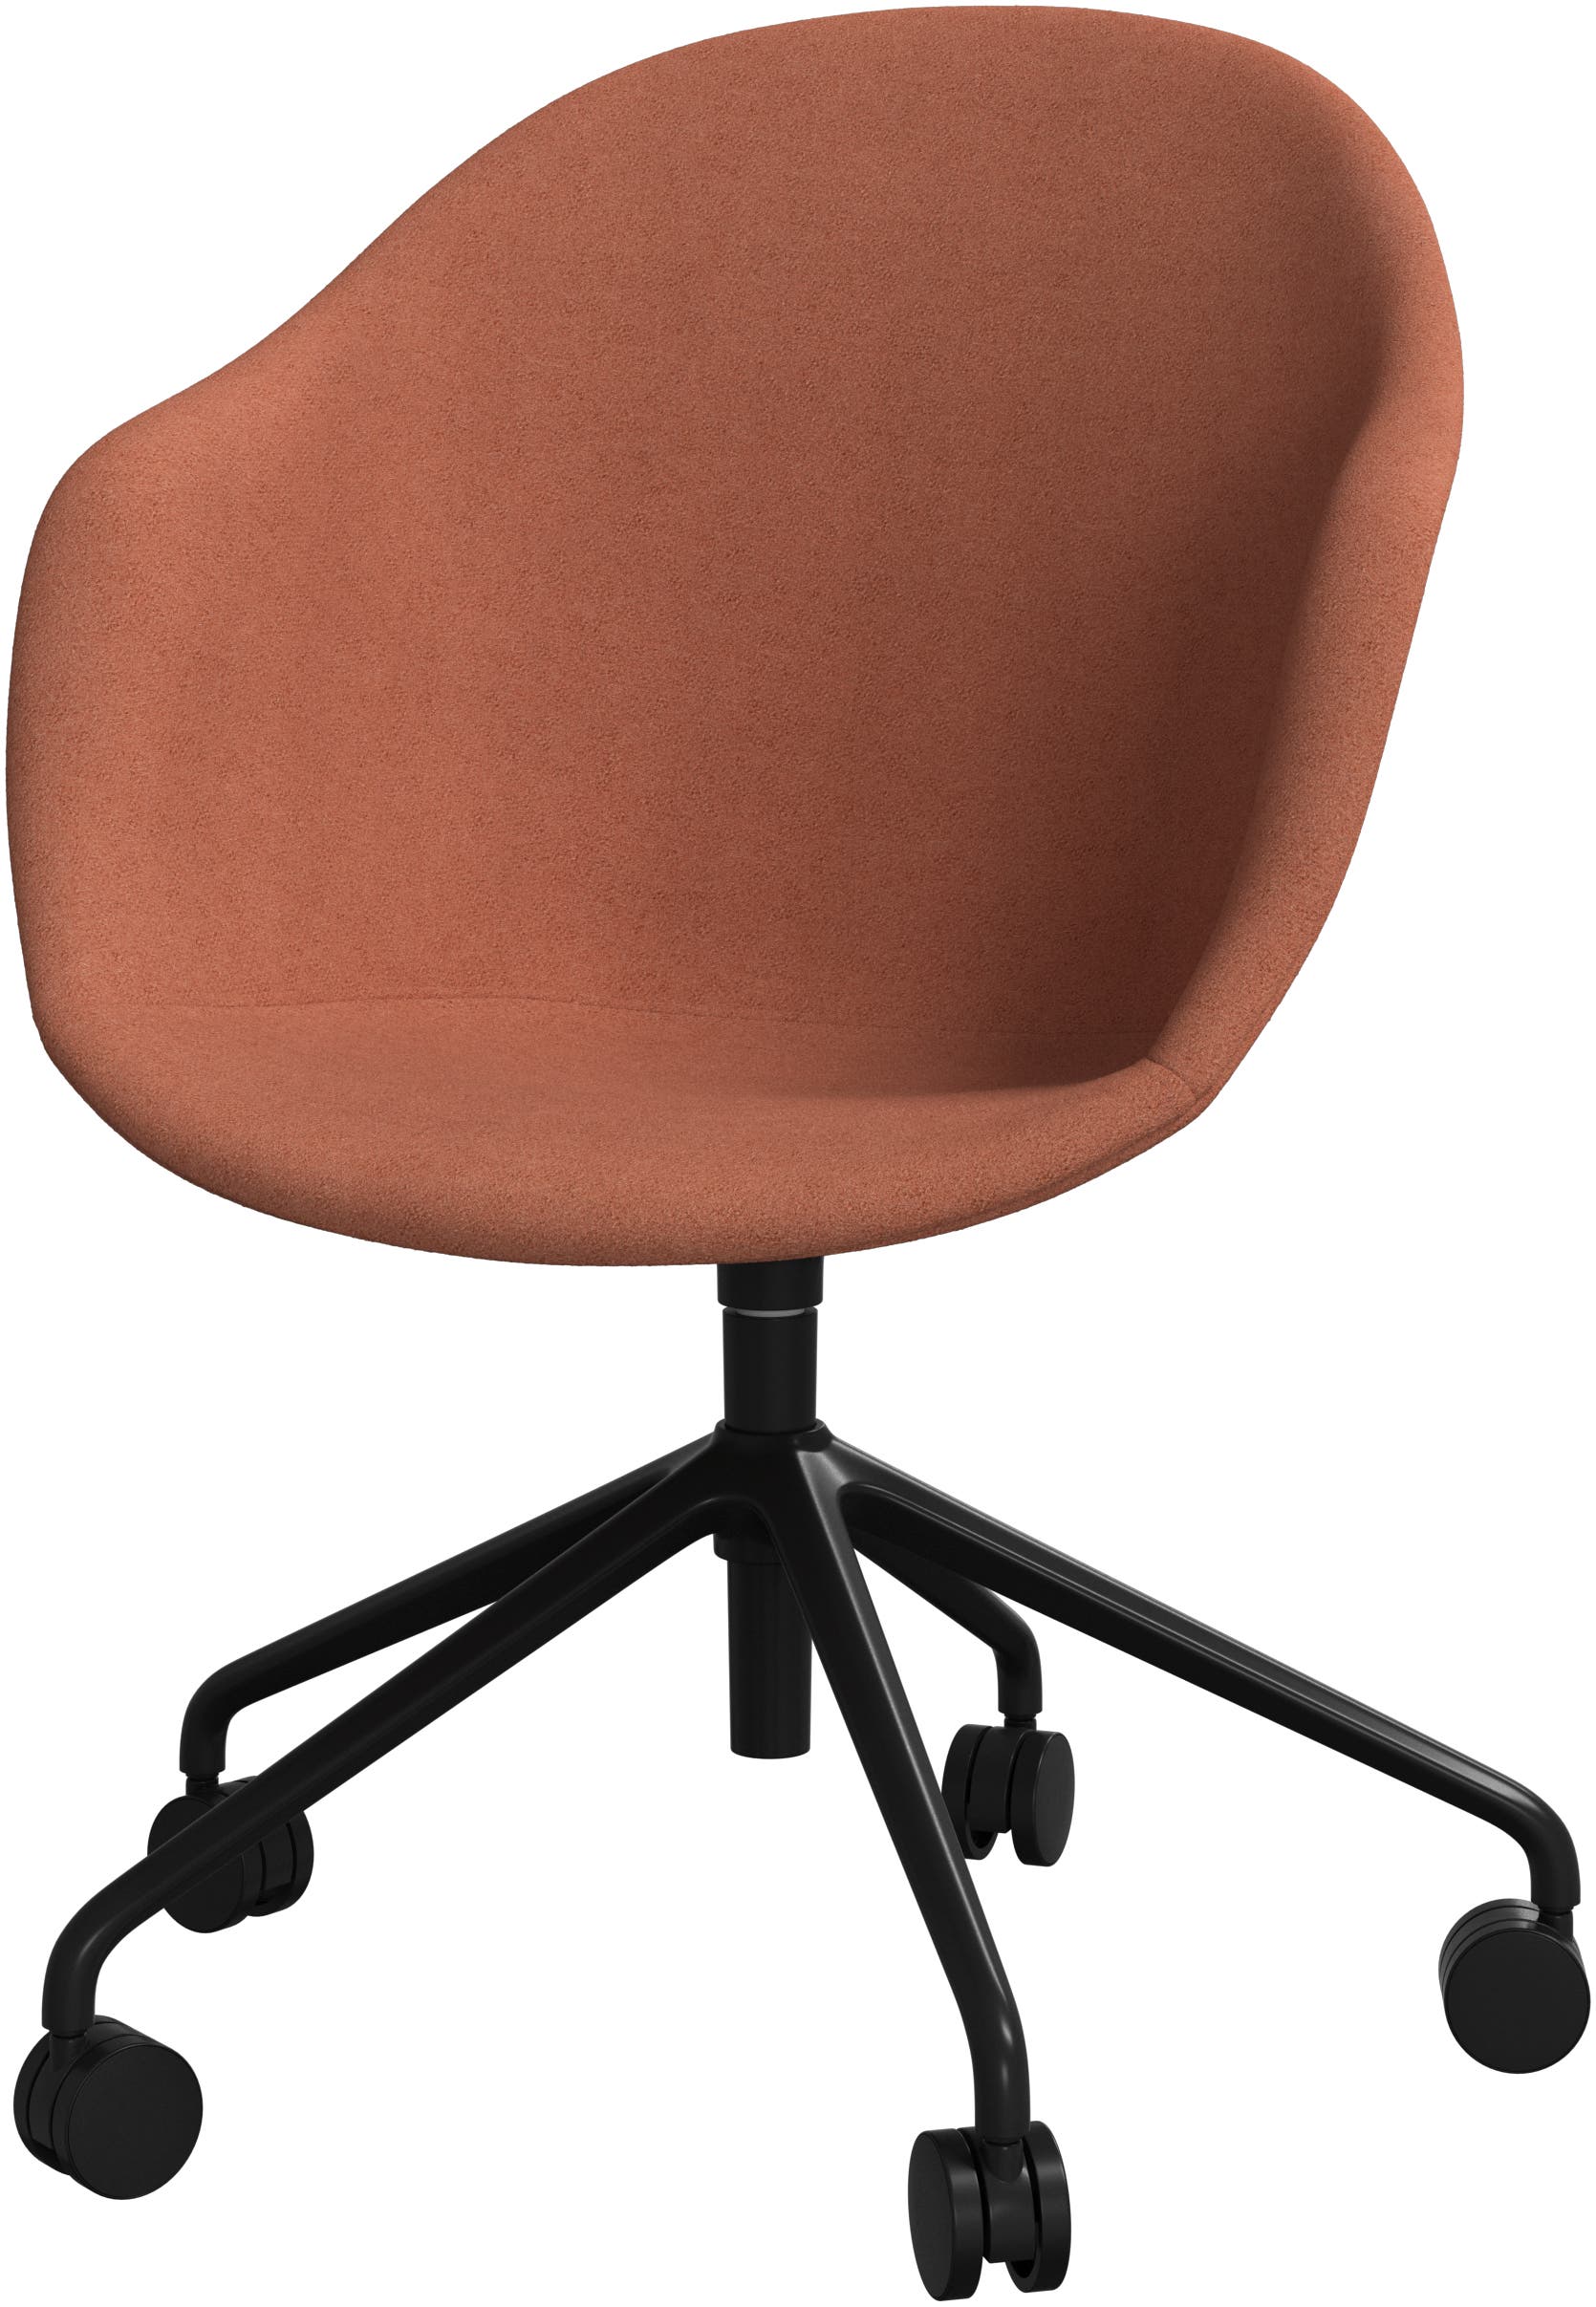 Adelaide-tuoli